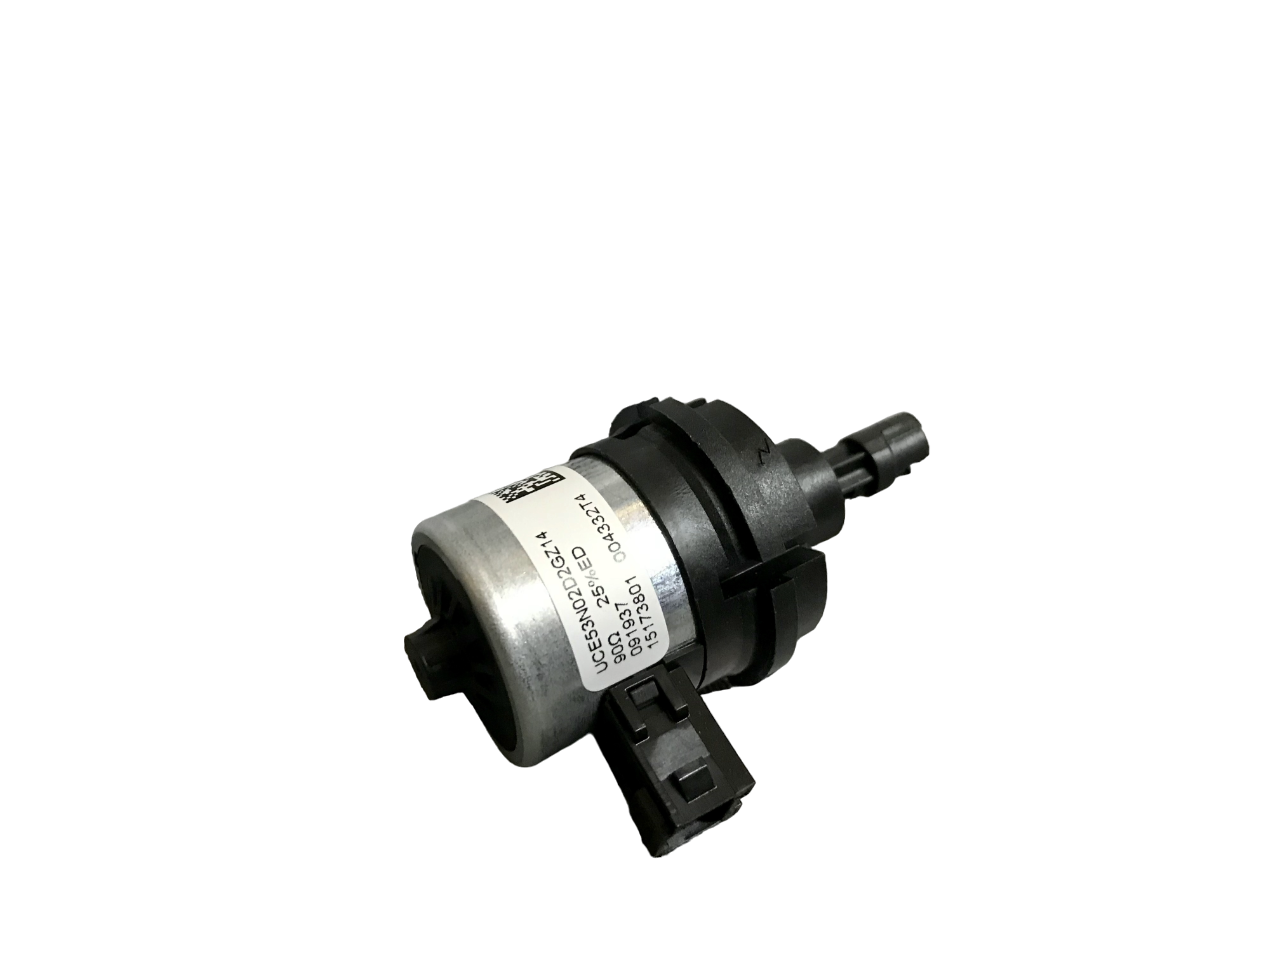 Мотор трехходового клапана Ariston 65114936 (оригинал)